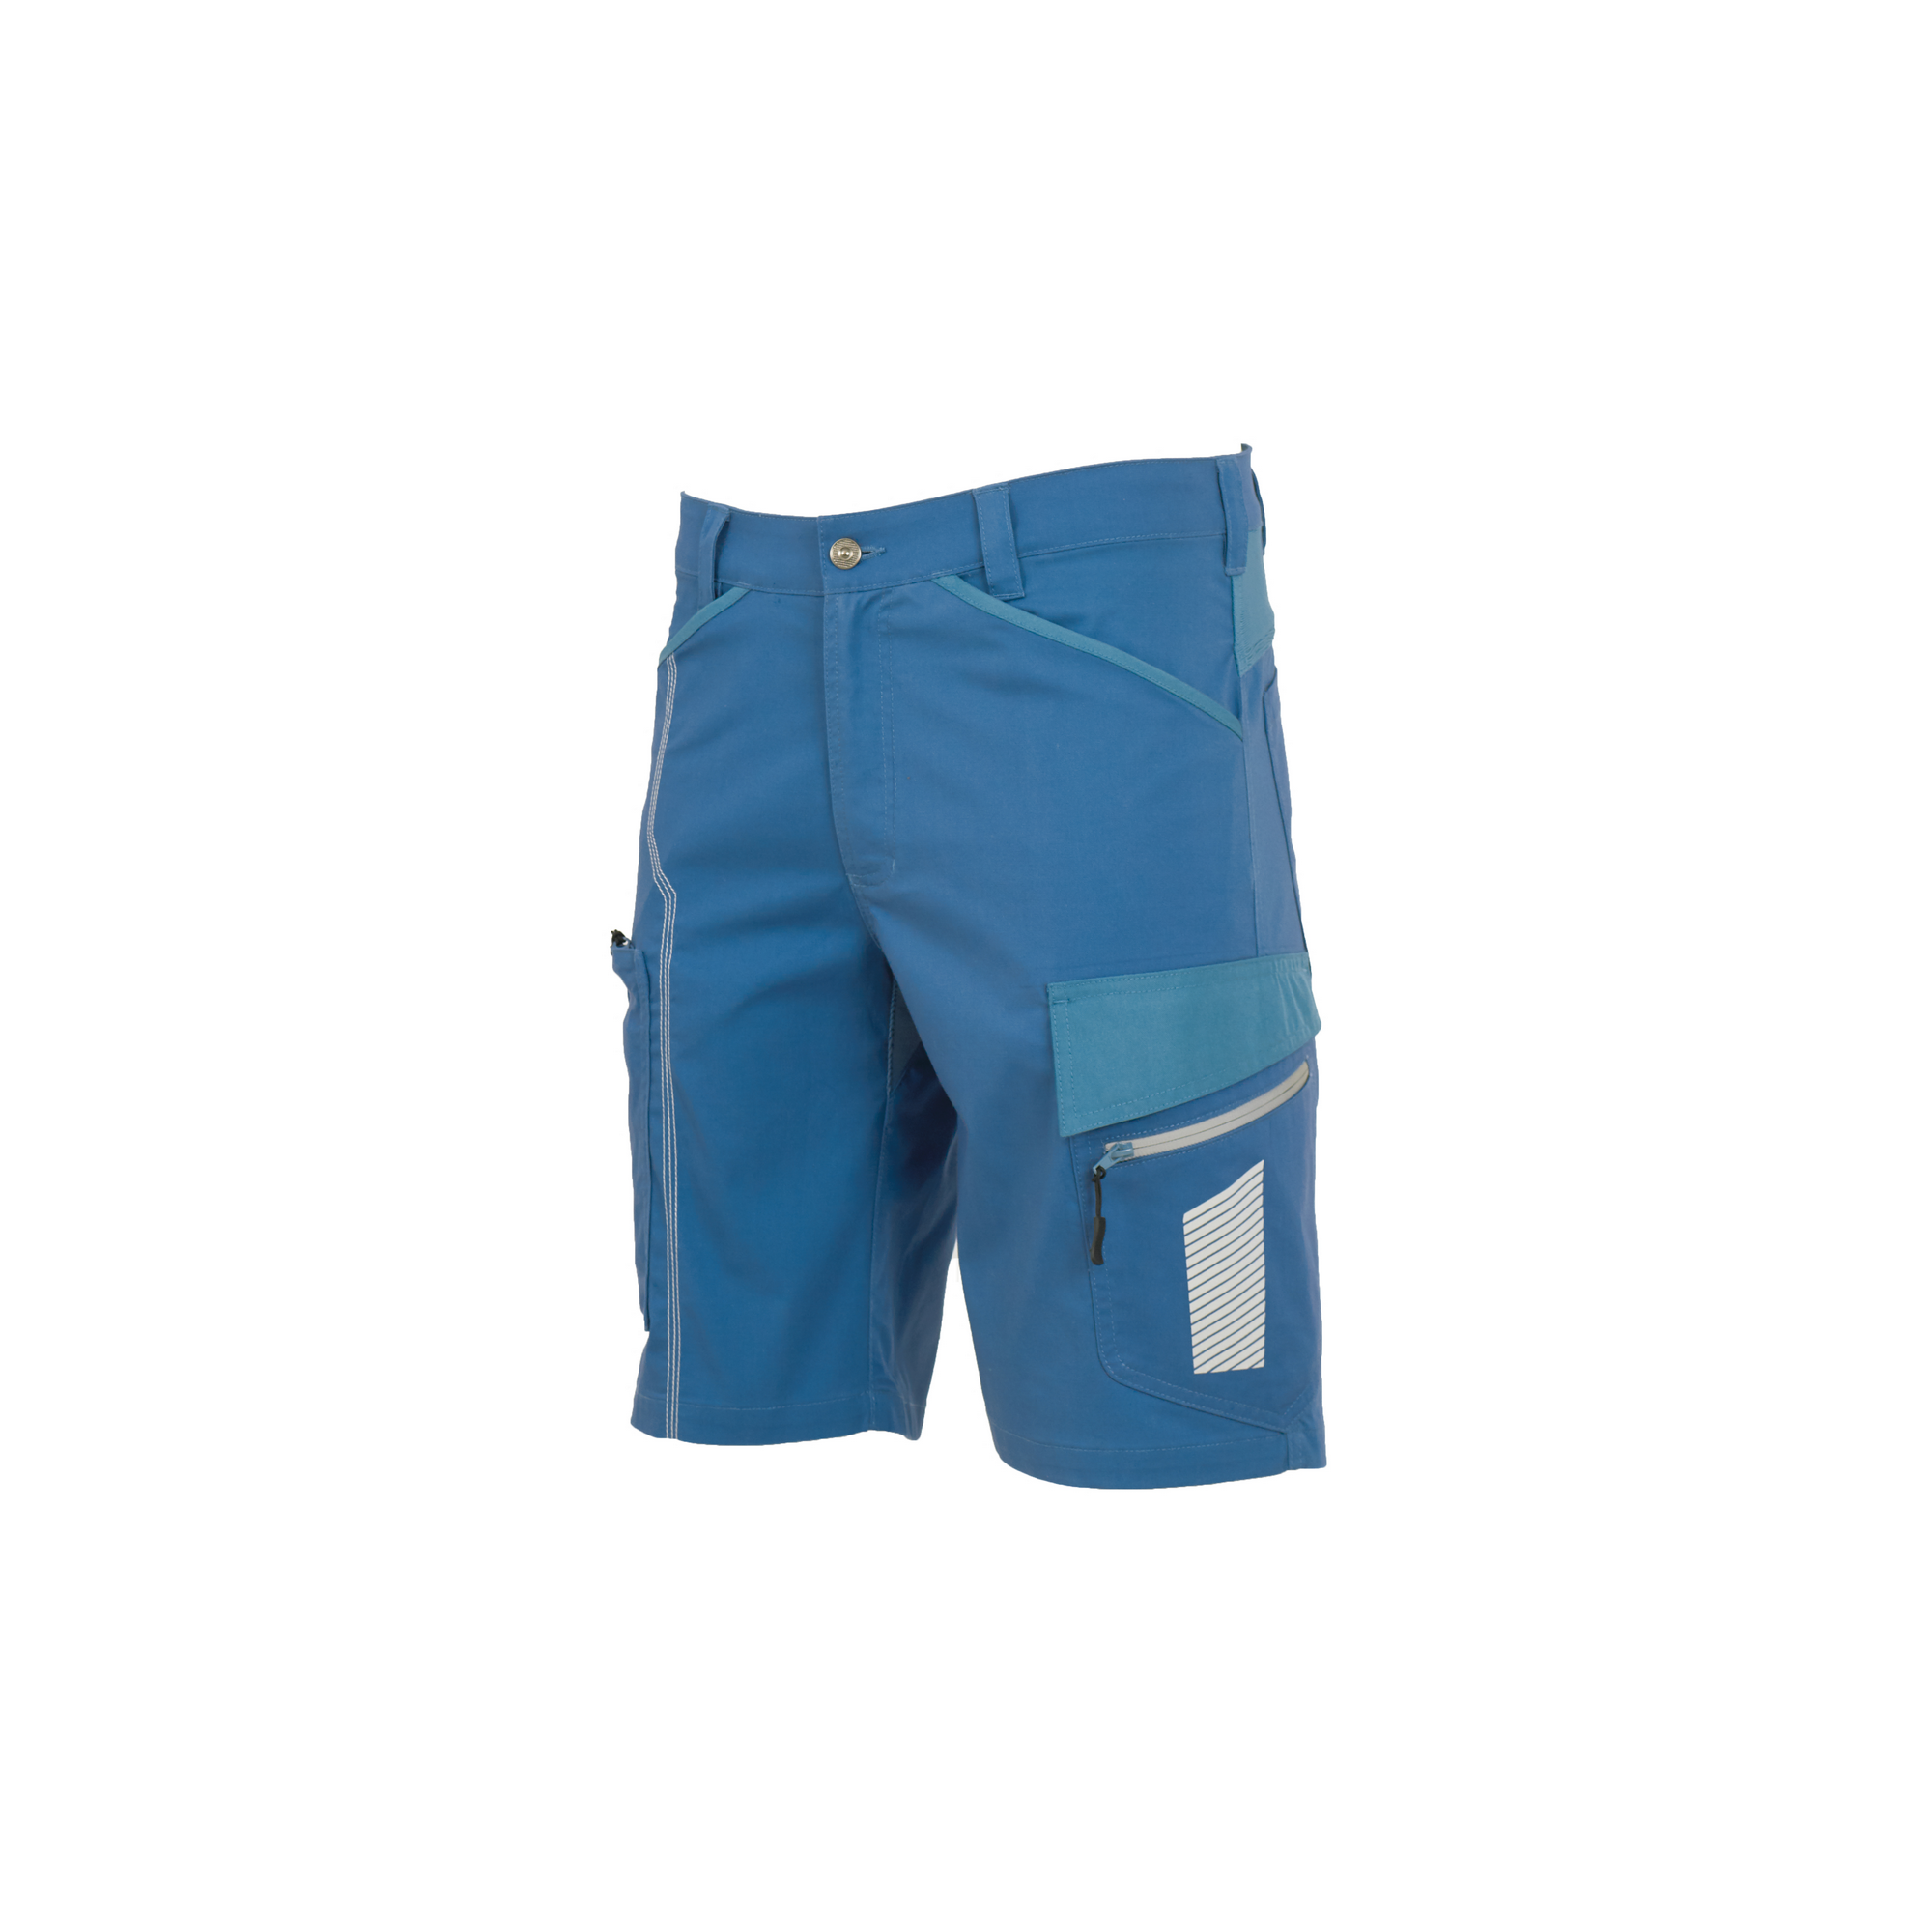 Shorts 'Taurus' blau 48 + product picture